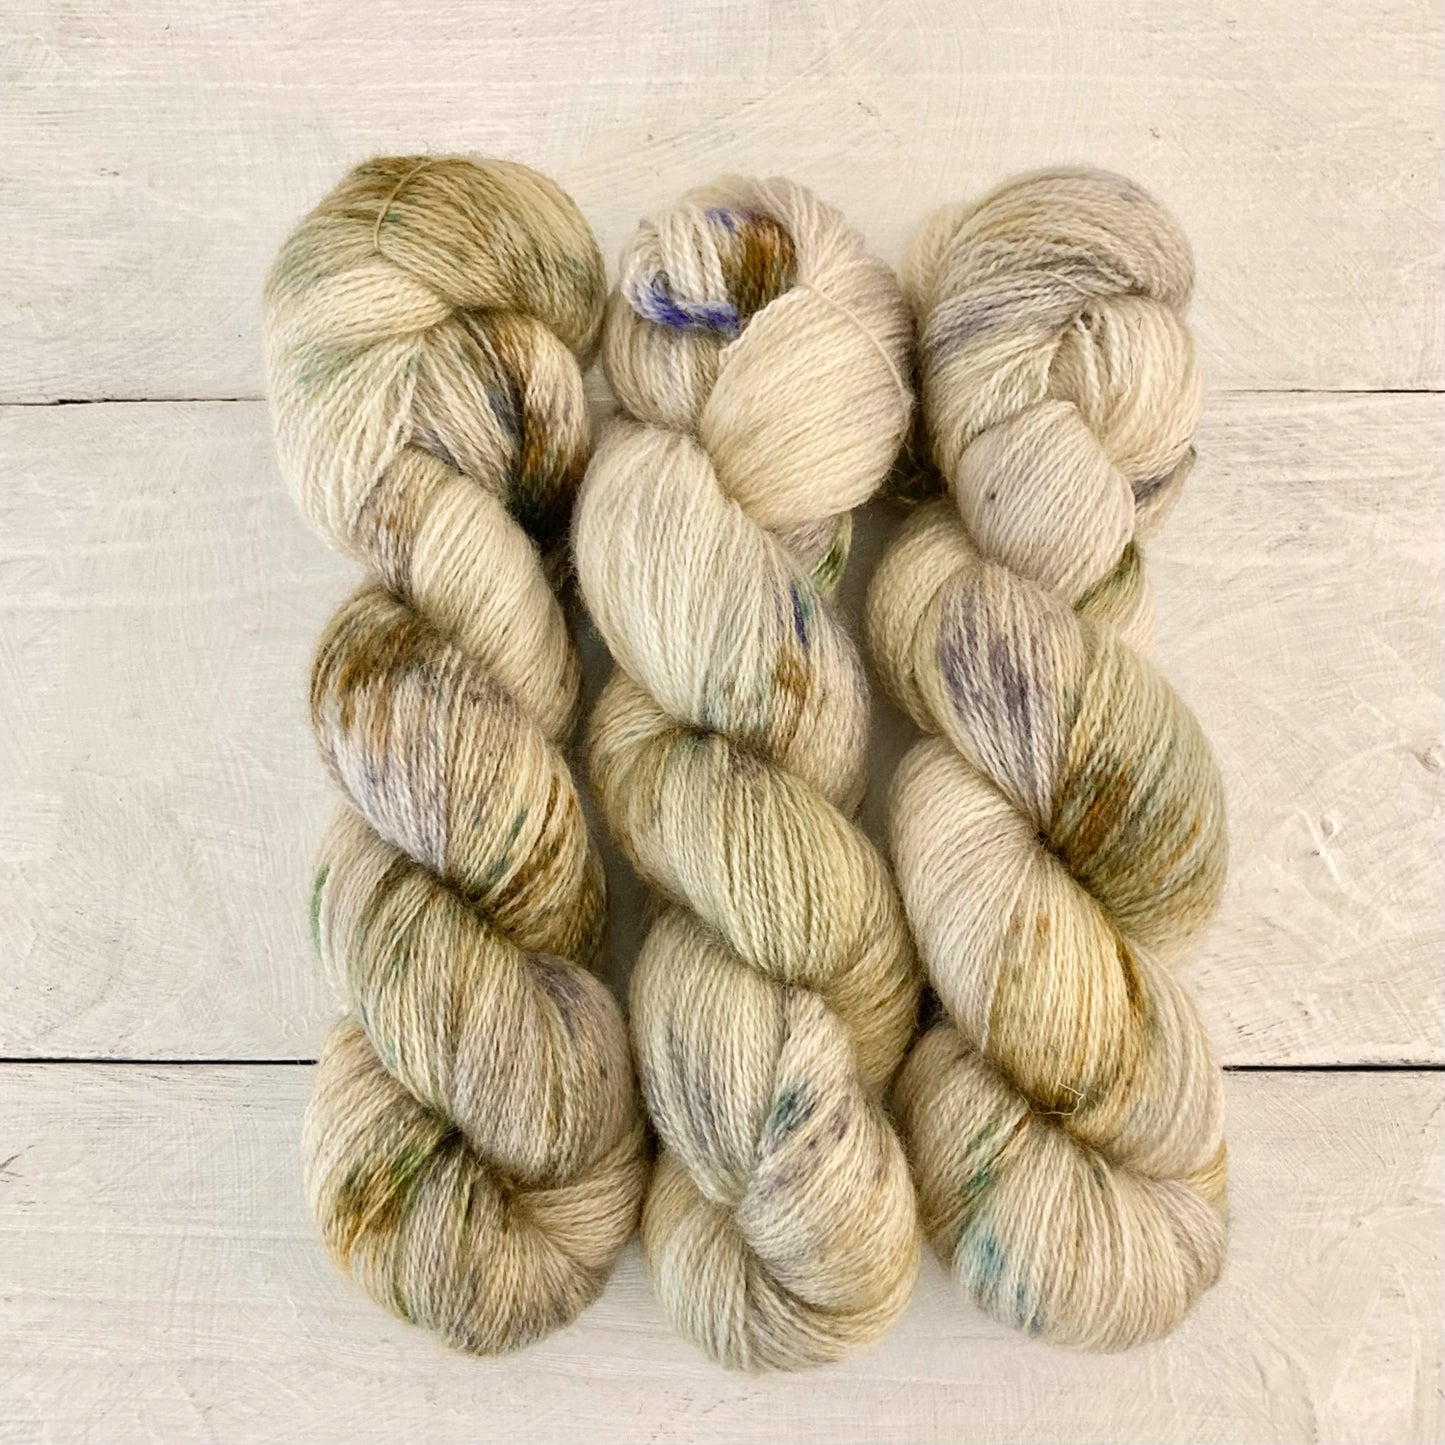 Hand-dyed yarn No.236 BFL lace "Scotland"